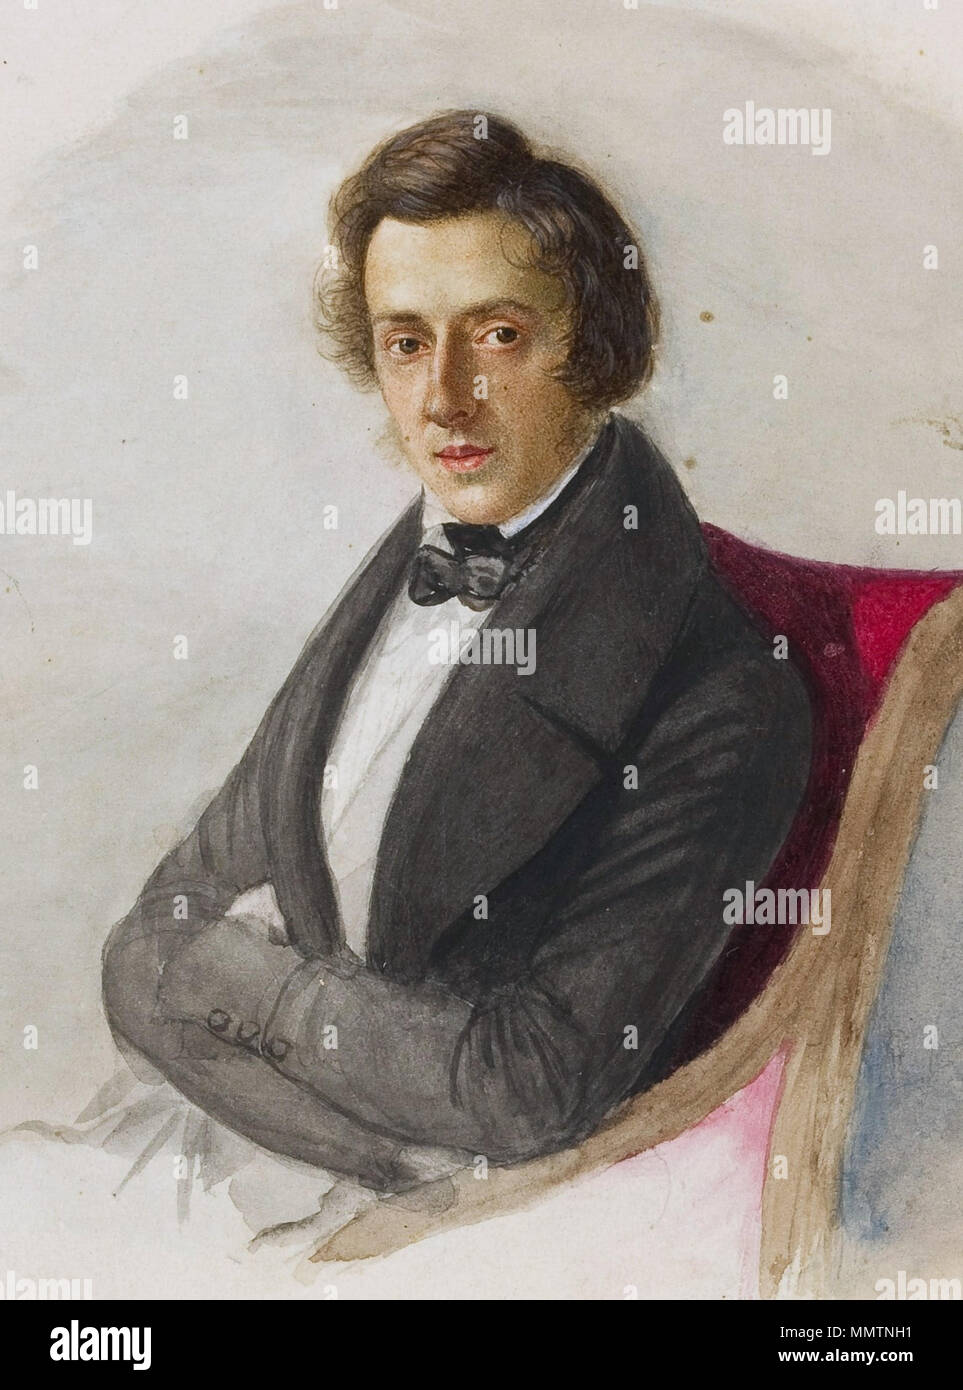 English: Portrait of Fryderyk Chopin. Polski: Portret Fryderyka Chopina.  ??????????: ??????? ????????? ??????. ?eština: Portrét Fryderyka Chopina.  1836. Chopin, by Wodzinska Stock Photo - Alamy